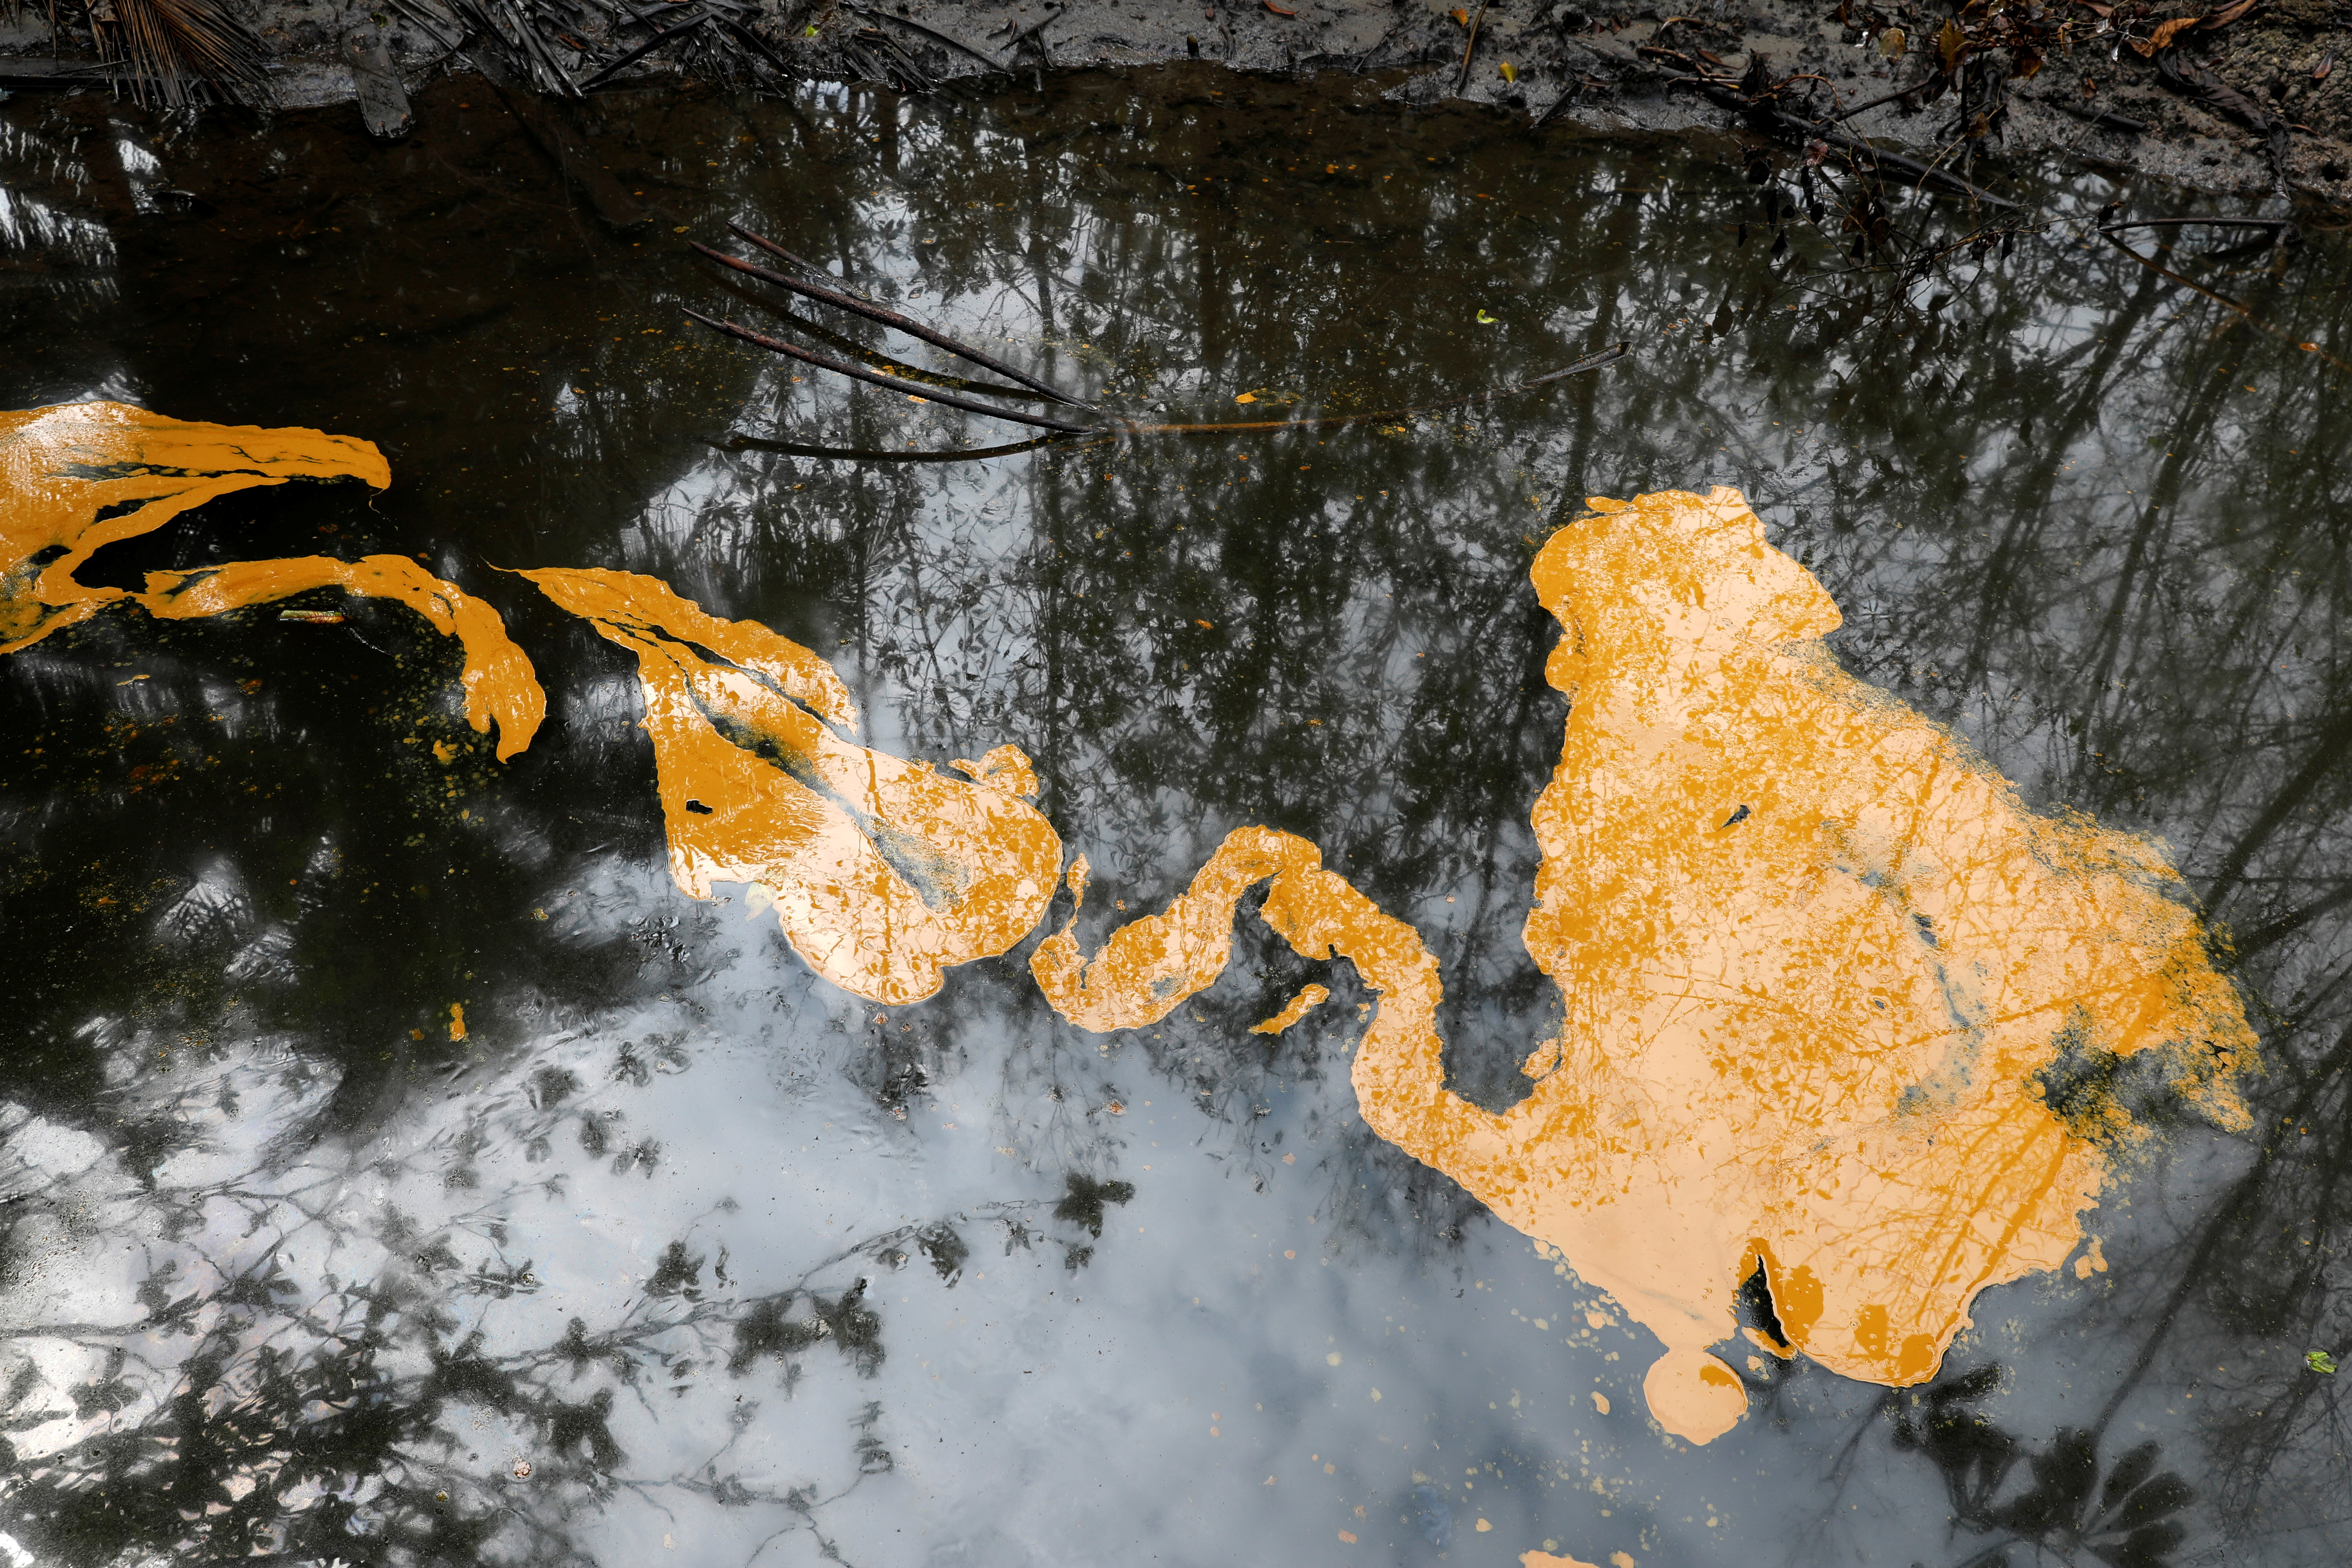 Nigeria needs $12 billion to clean up Bayelsa oil spills - report